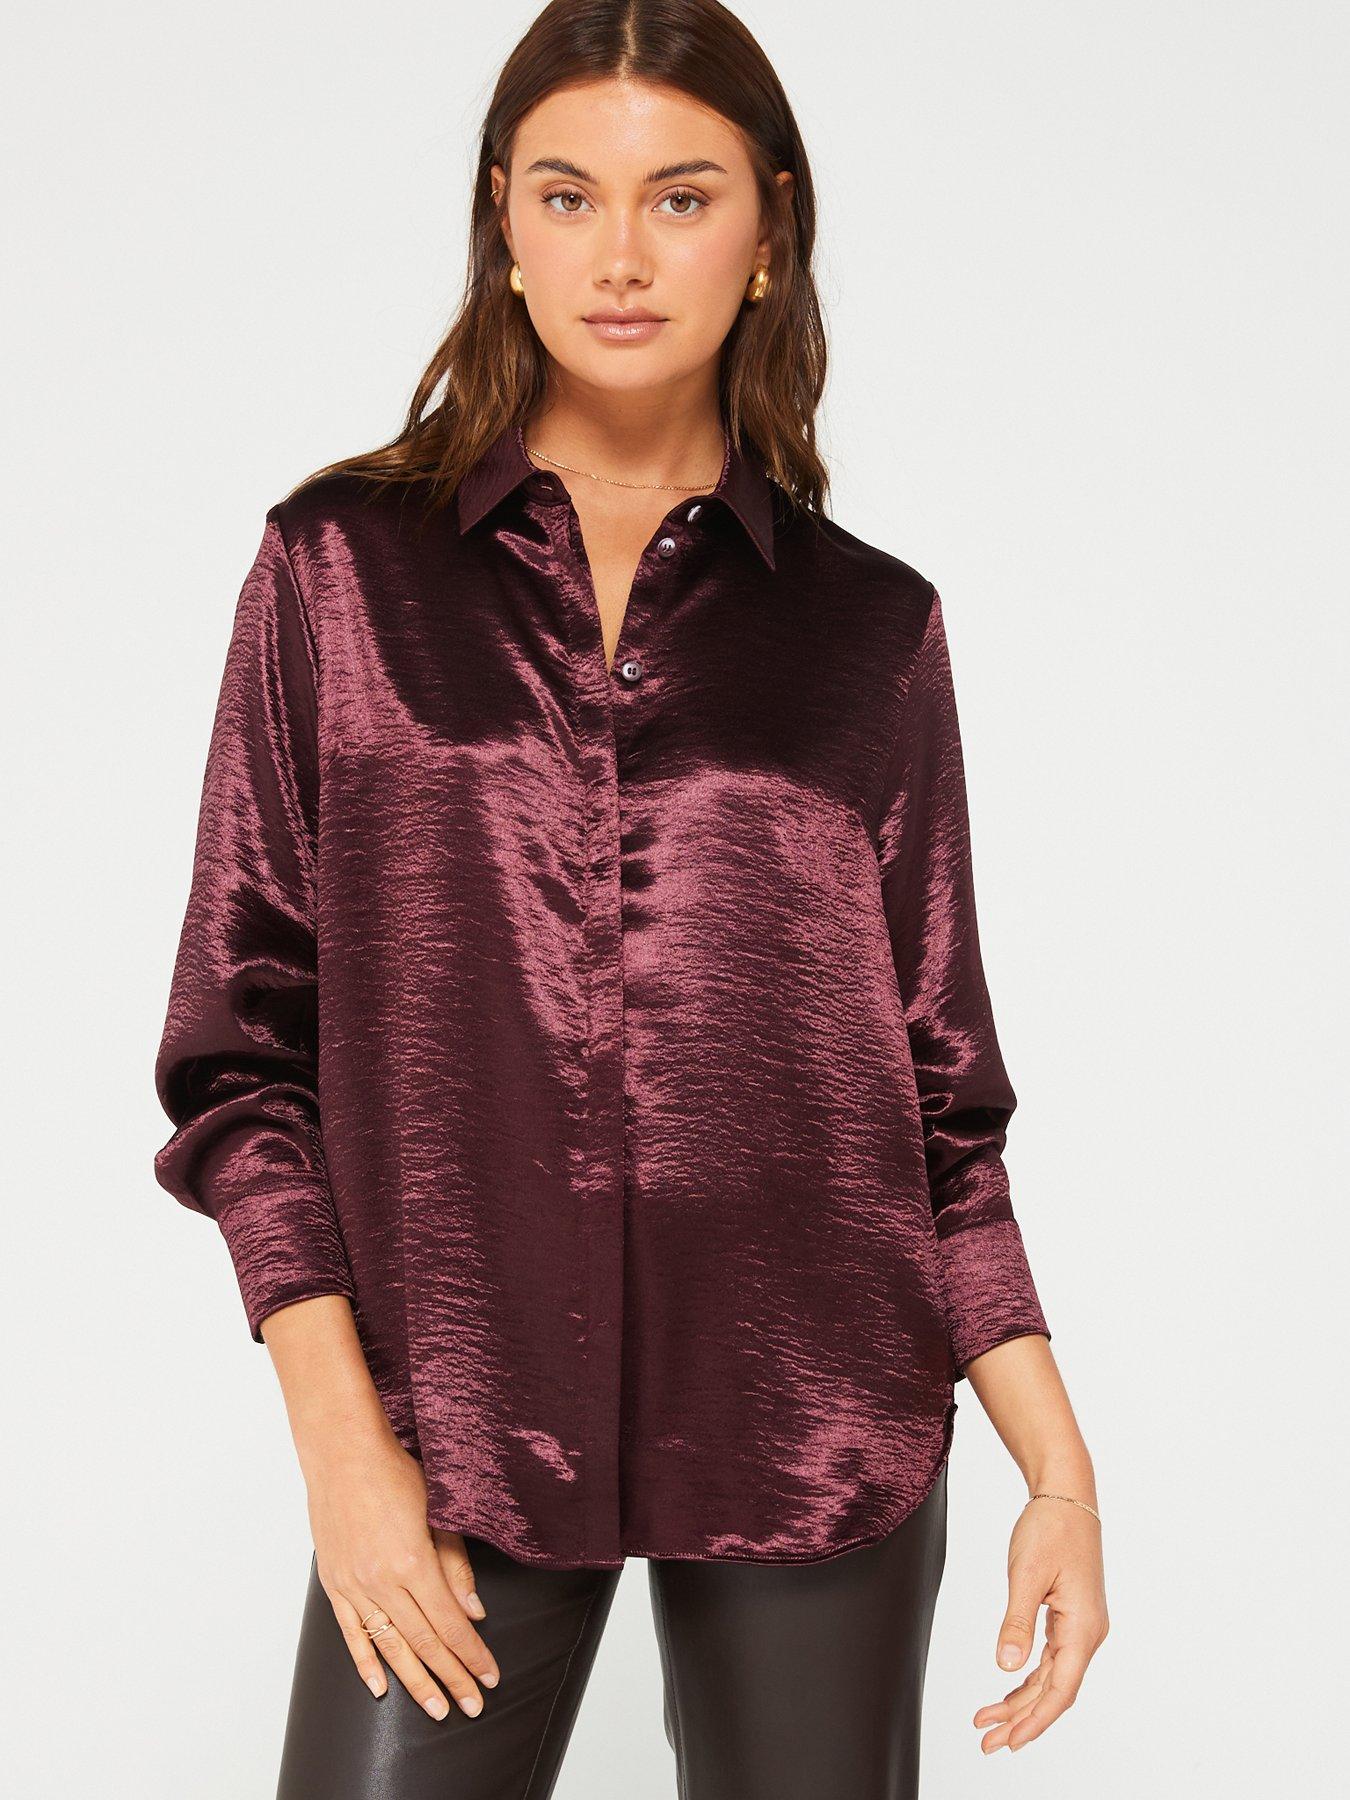 Lucky Brand 100% Polyester Purple Burgundy Long Sleeve Blouse Size